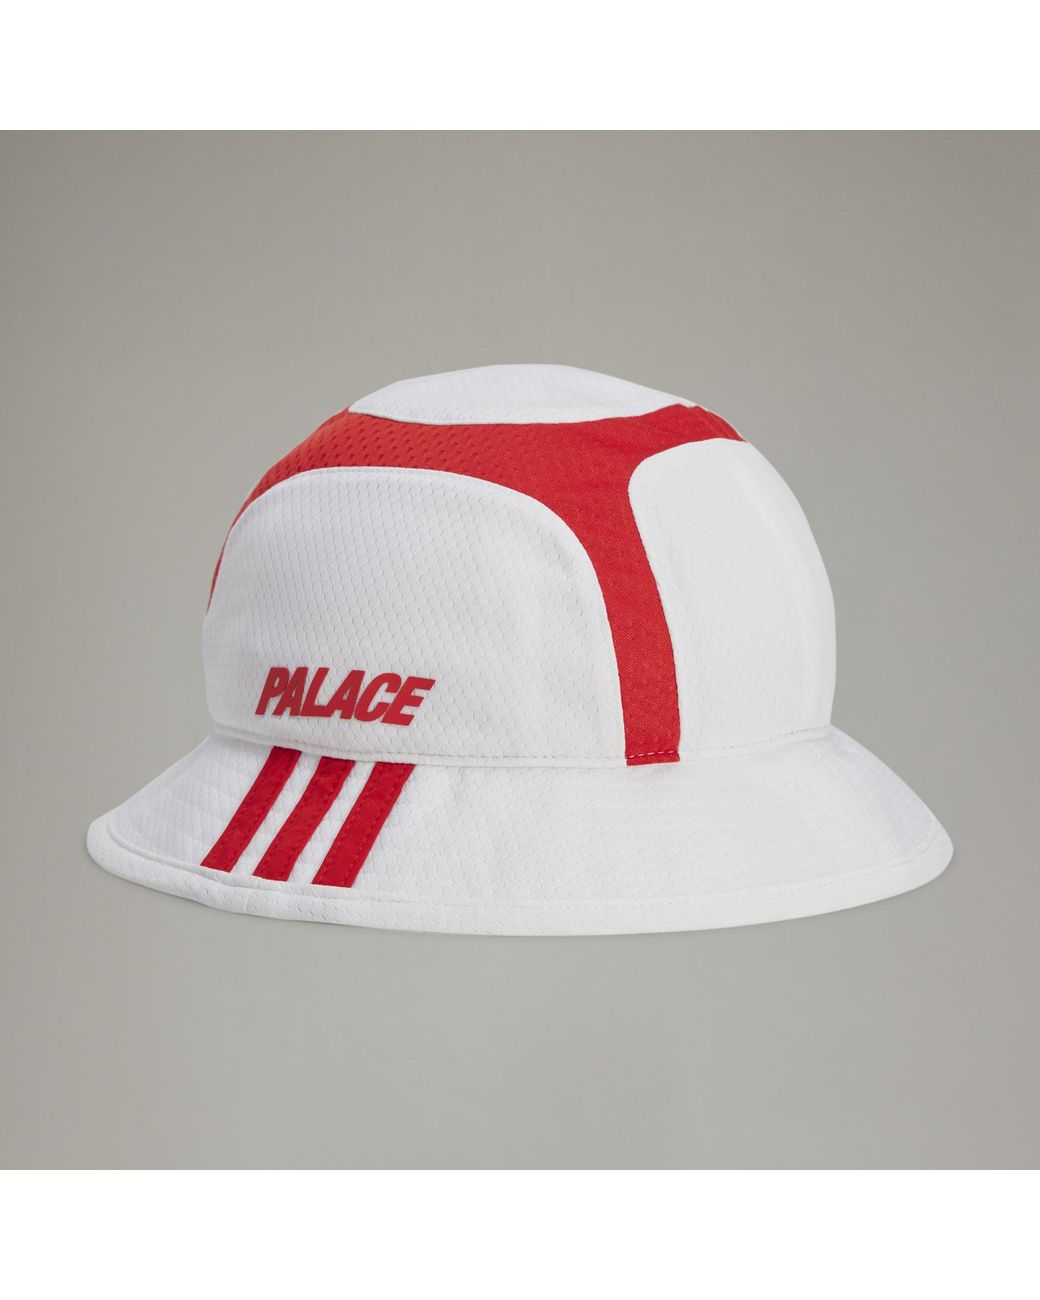 Palace Adidas Yoga Bucket Hat supreme 帽子 ハット goldleafwindows.ca